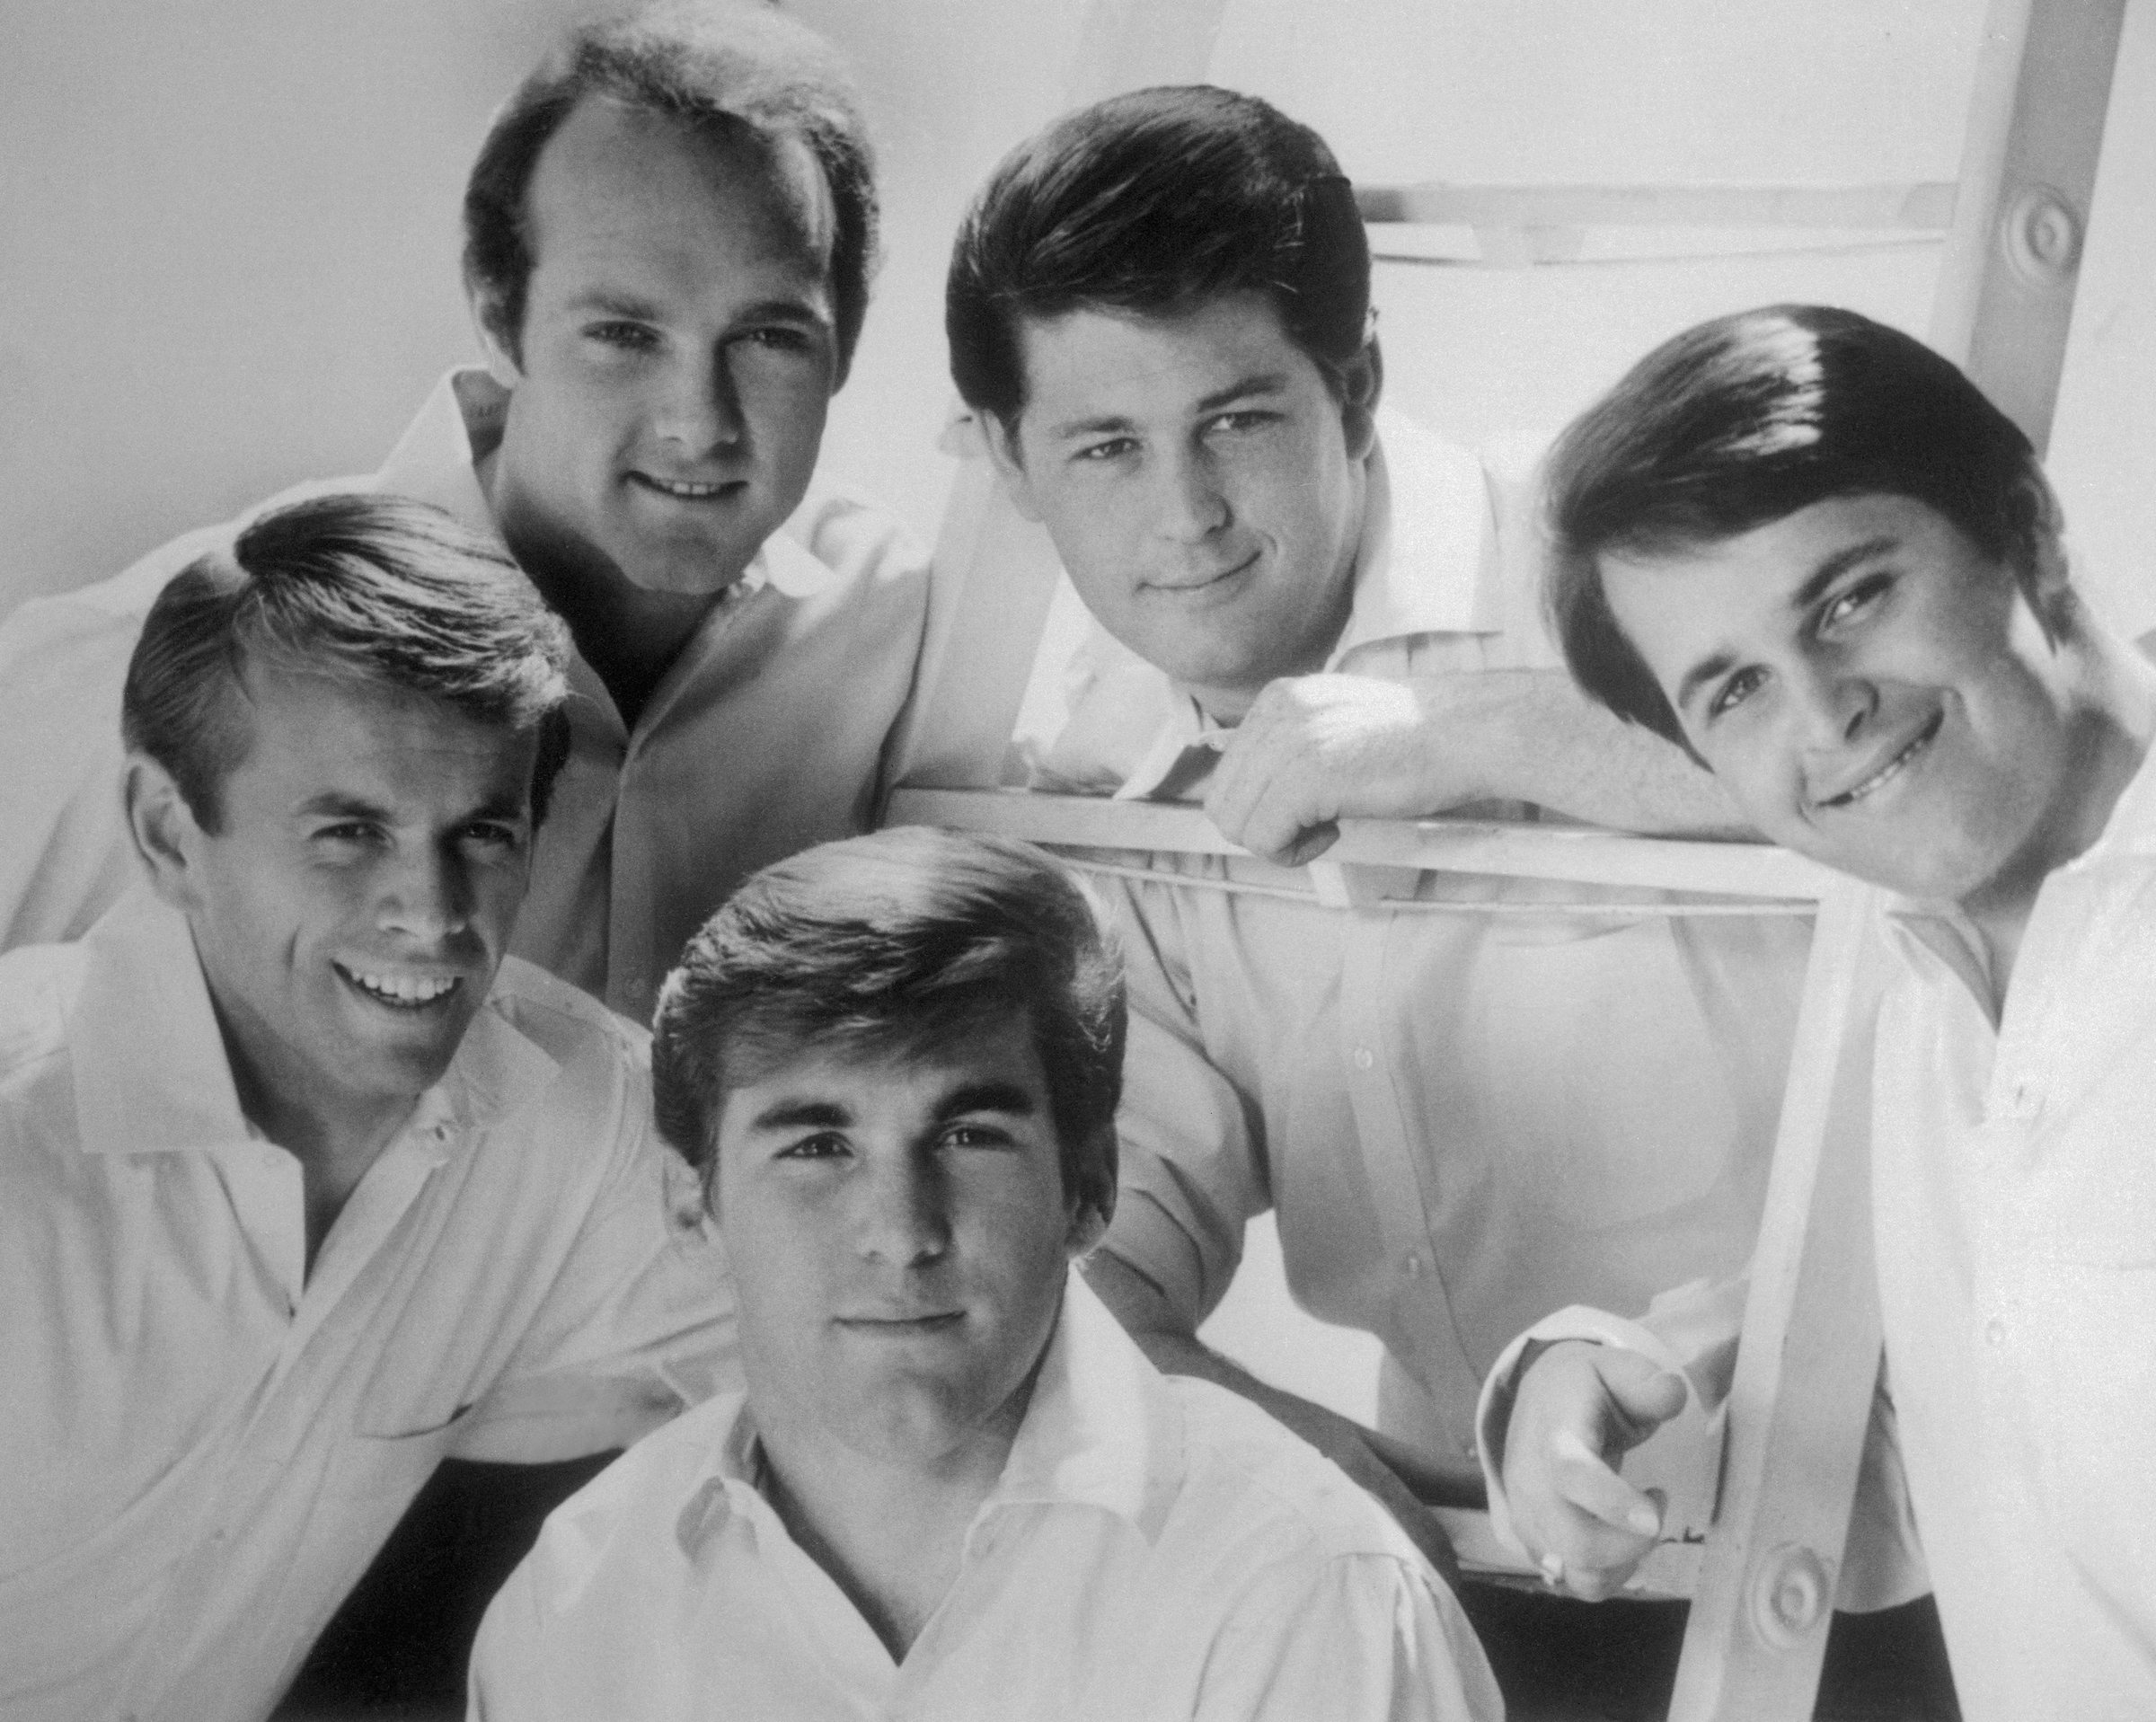 The Beach Boys are Al Jardine, Mike Love, Brian Wilson, Dennis Wilson, and Carl Wilson